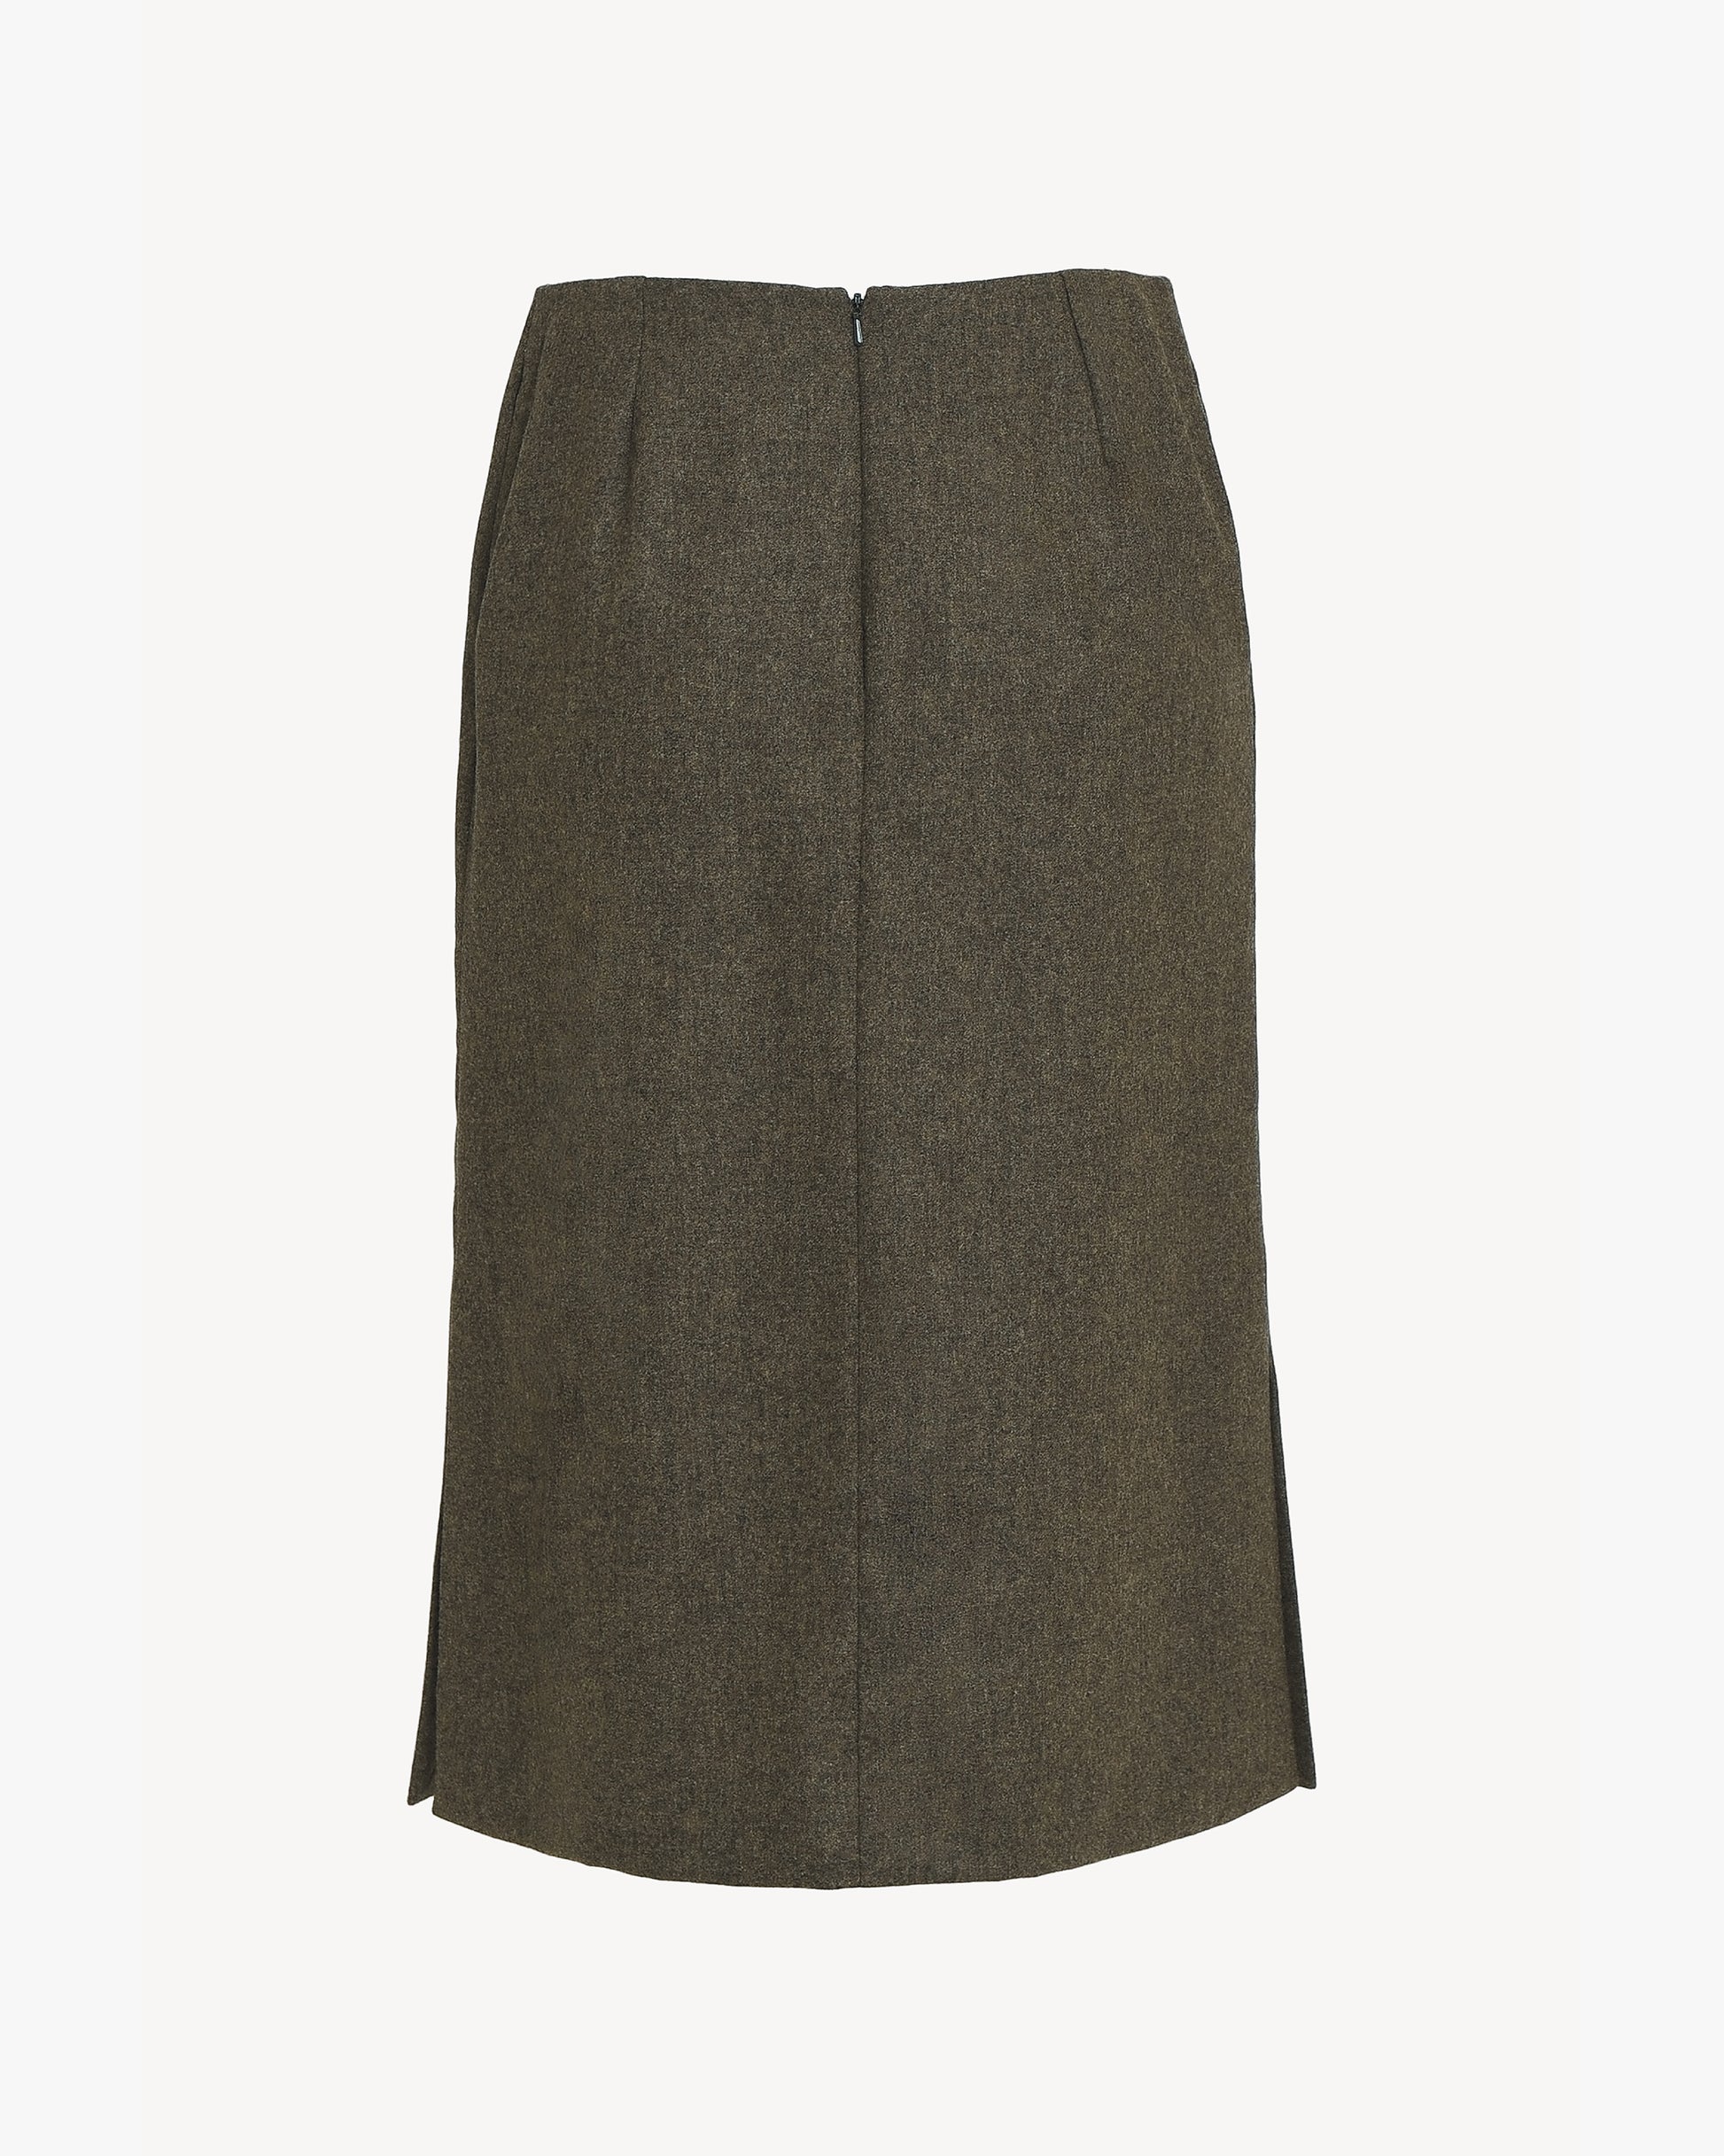 Issue Twelve Uma Skirt in Wool Cashmere Moss Green